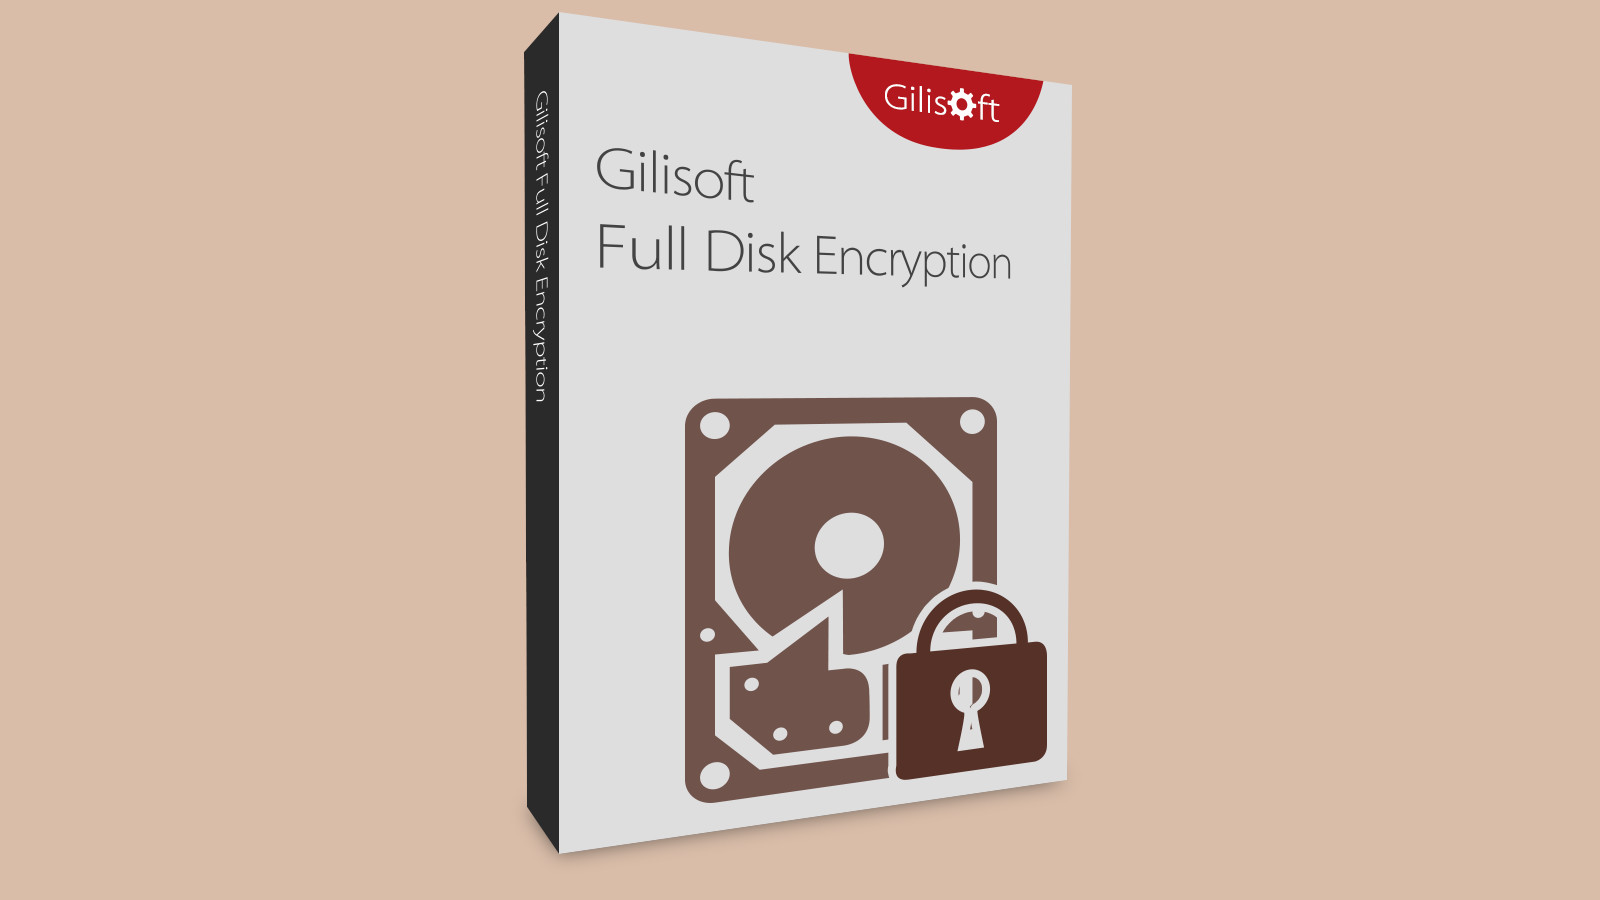 Gilisoft Full Disk Encryption CD Key, $19.72